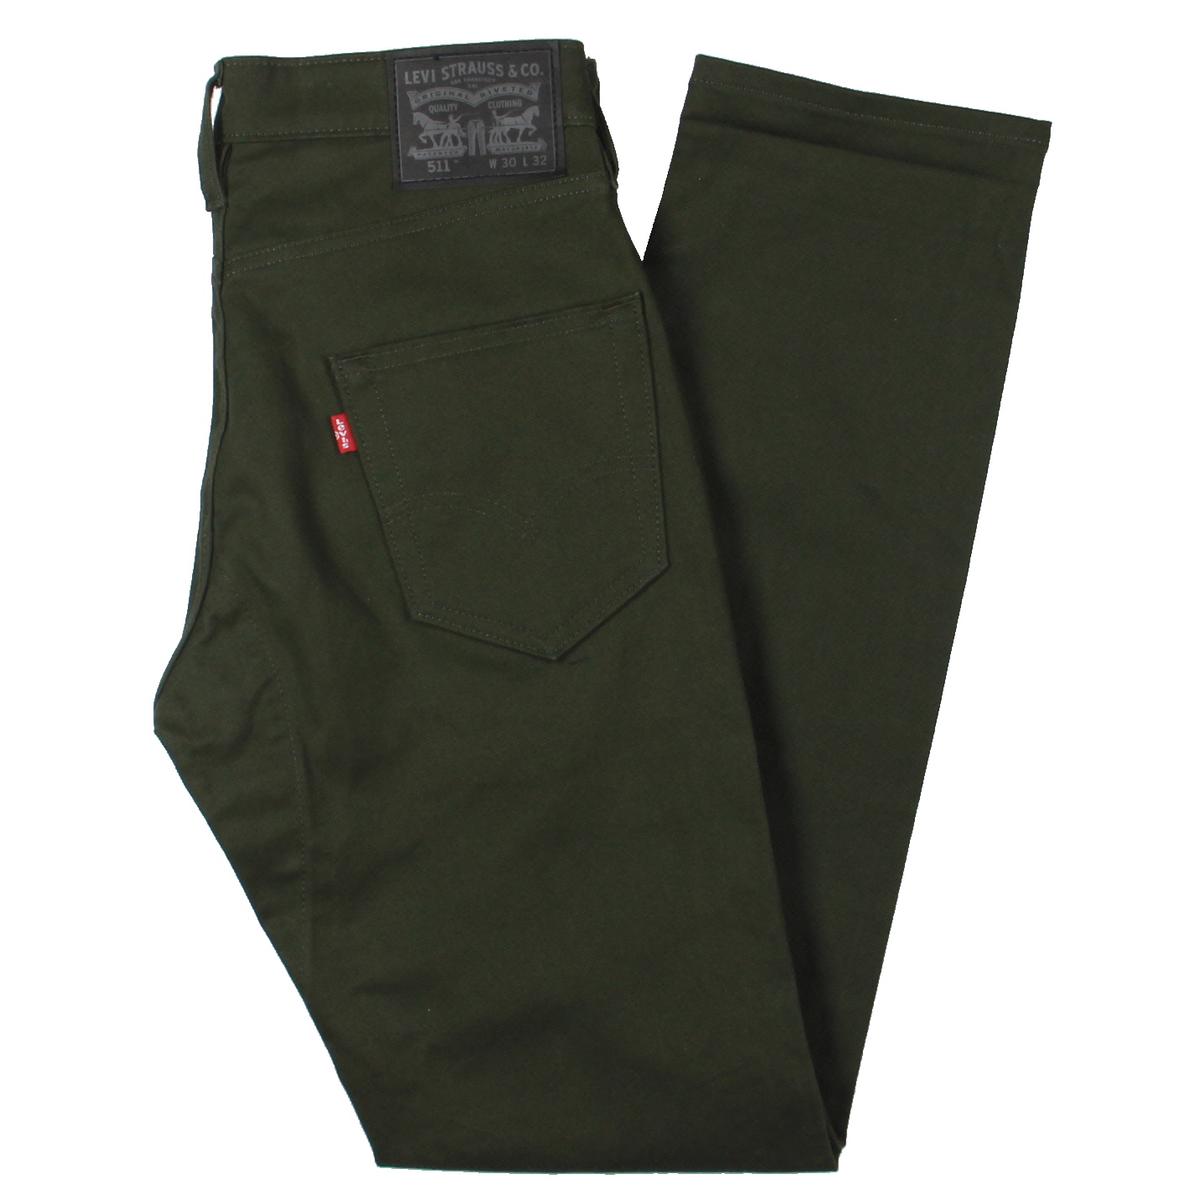 Levi's Mens 511 Green Denim Stretch Pants Slim Leg Jeans 30/32 BHFO ...